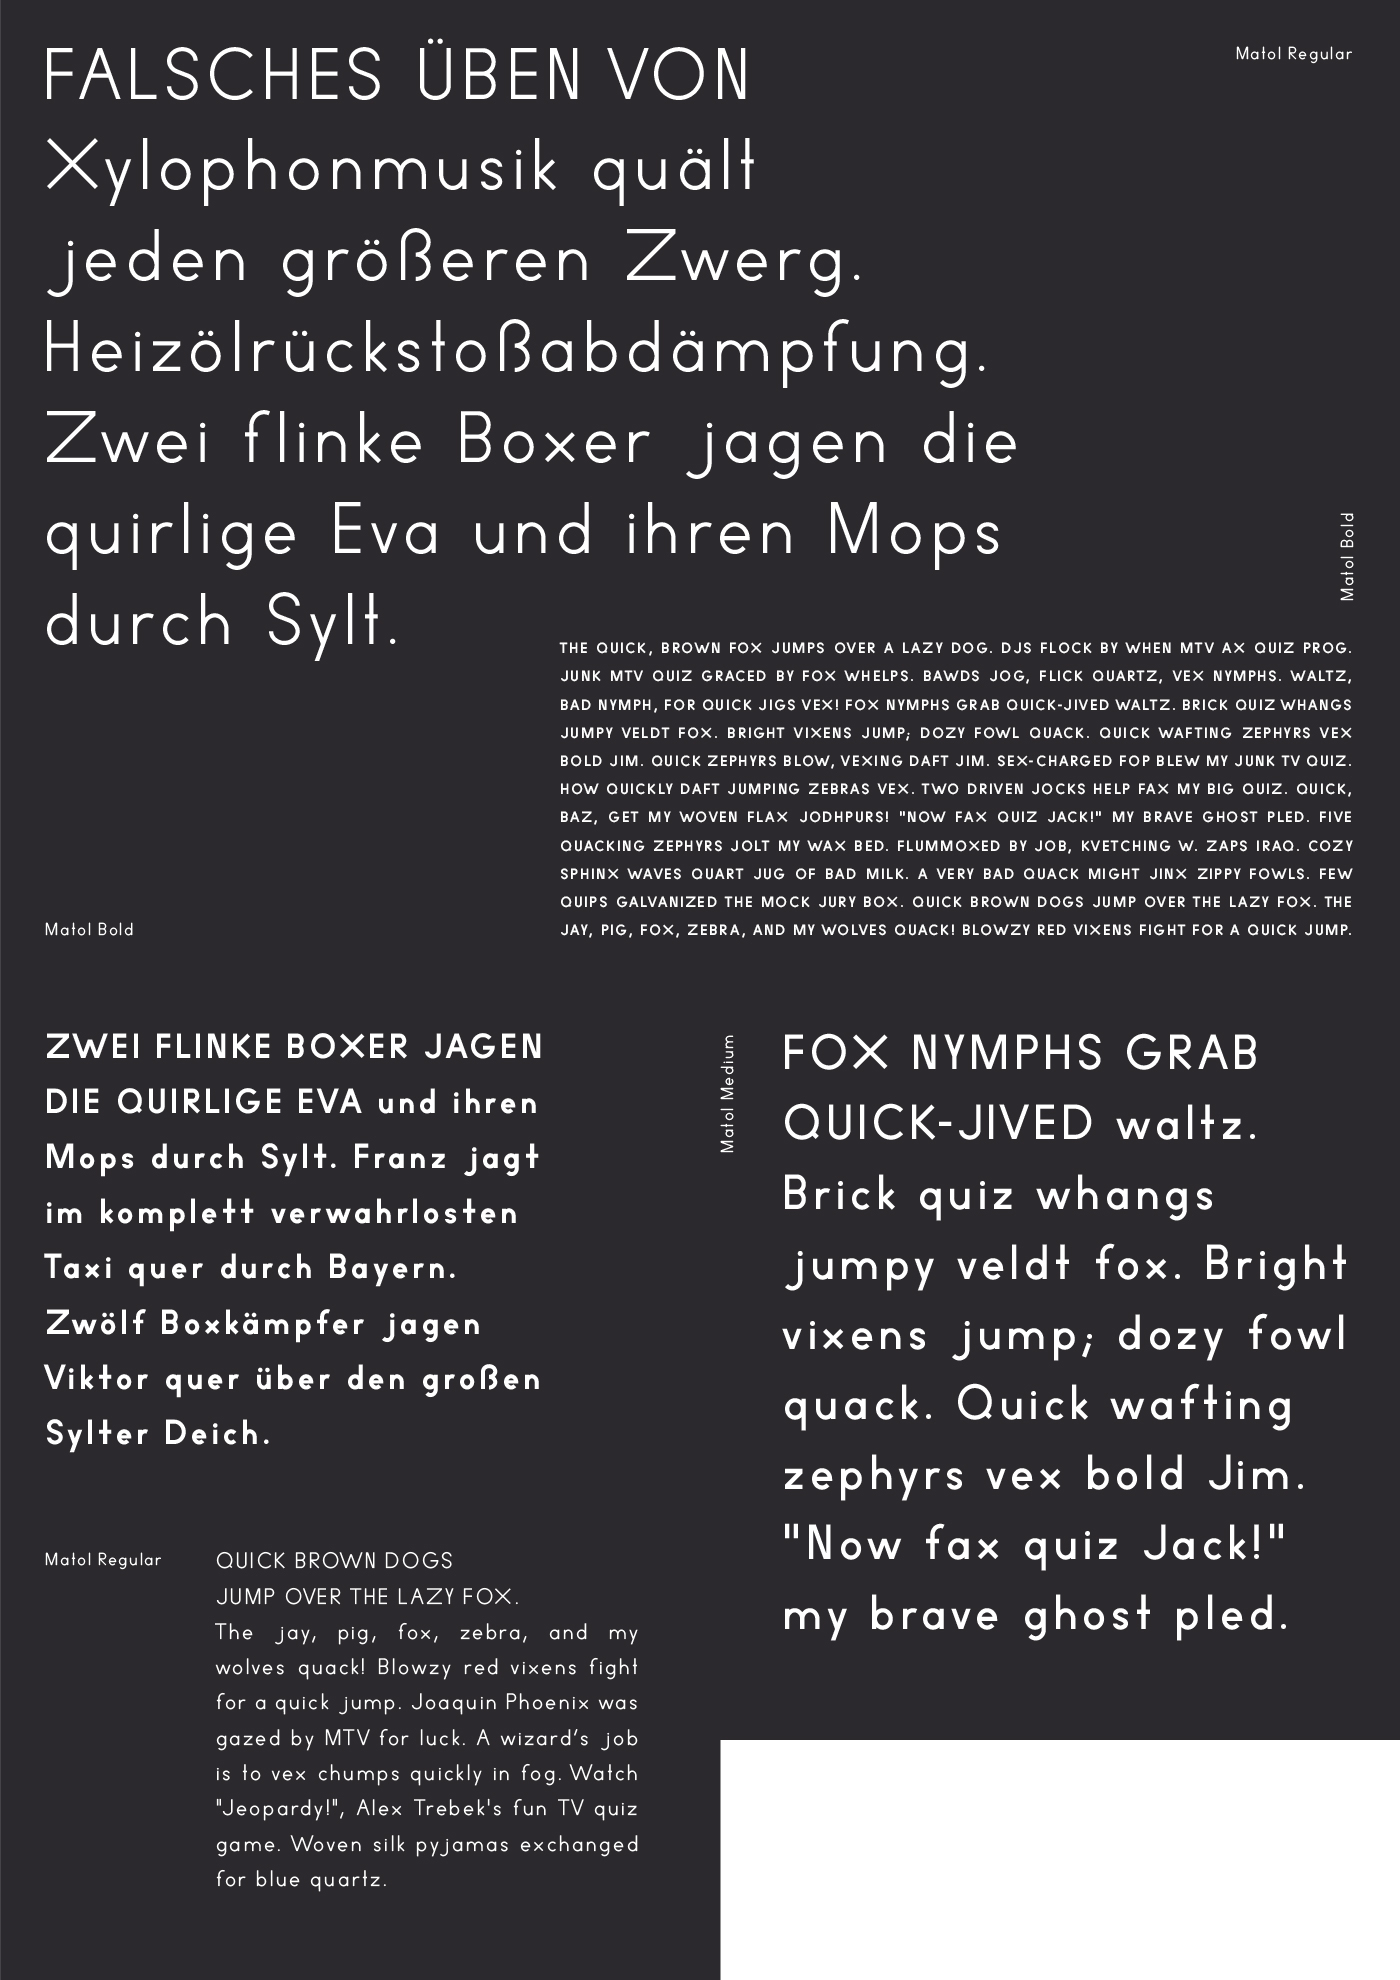 free font styles